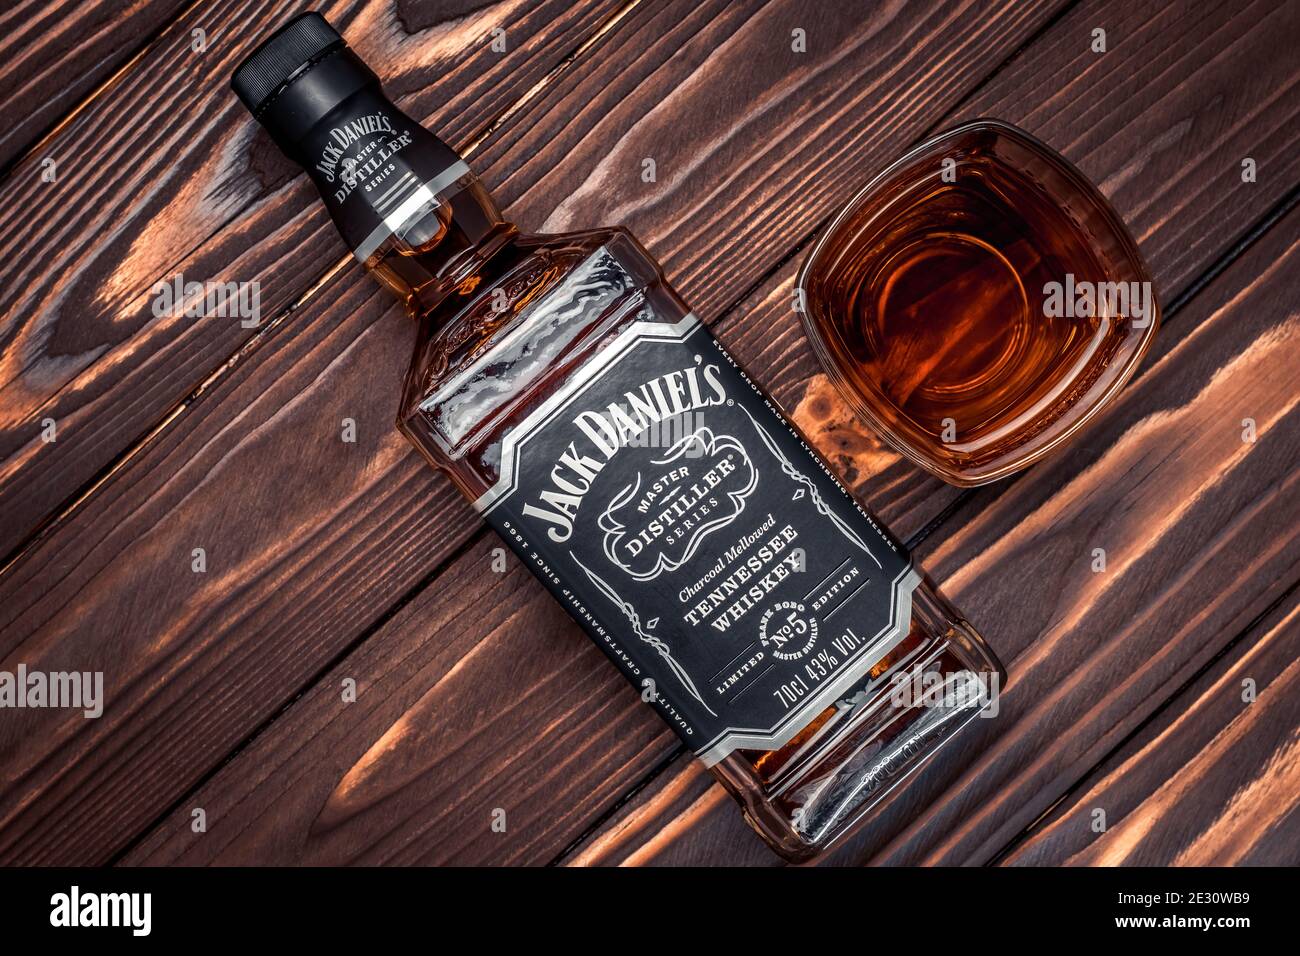 "Jack Daniels Honey" Limited Edition & 5 SHOT GLASSES Jack Daniels Bar Bucket 